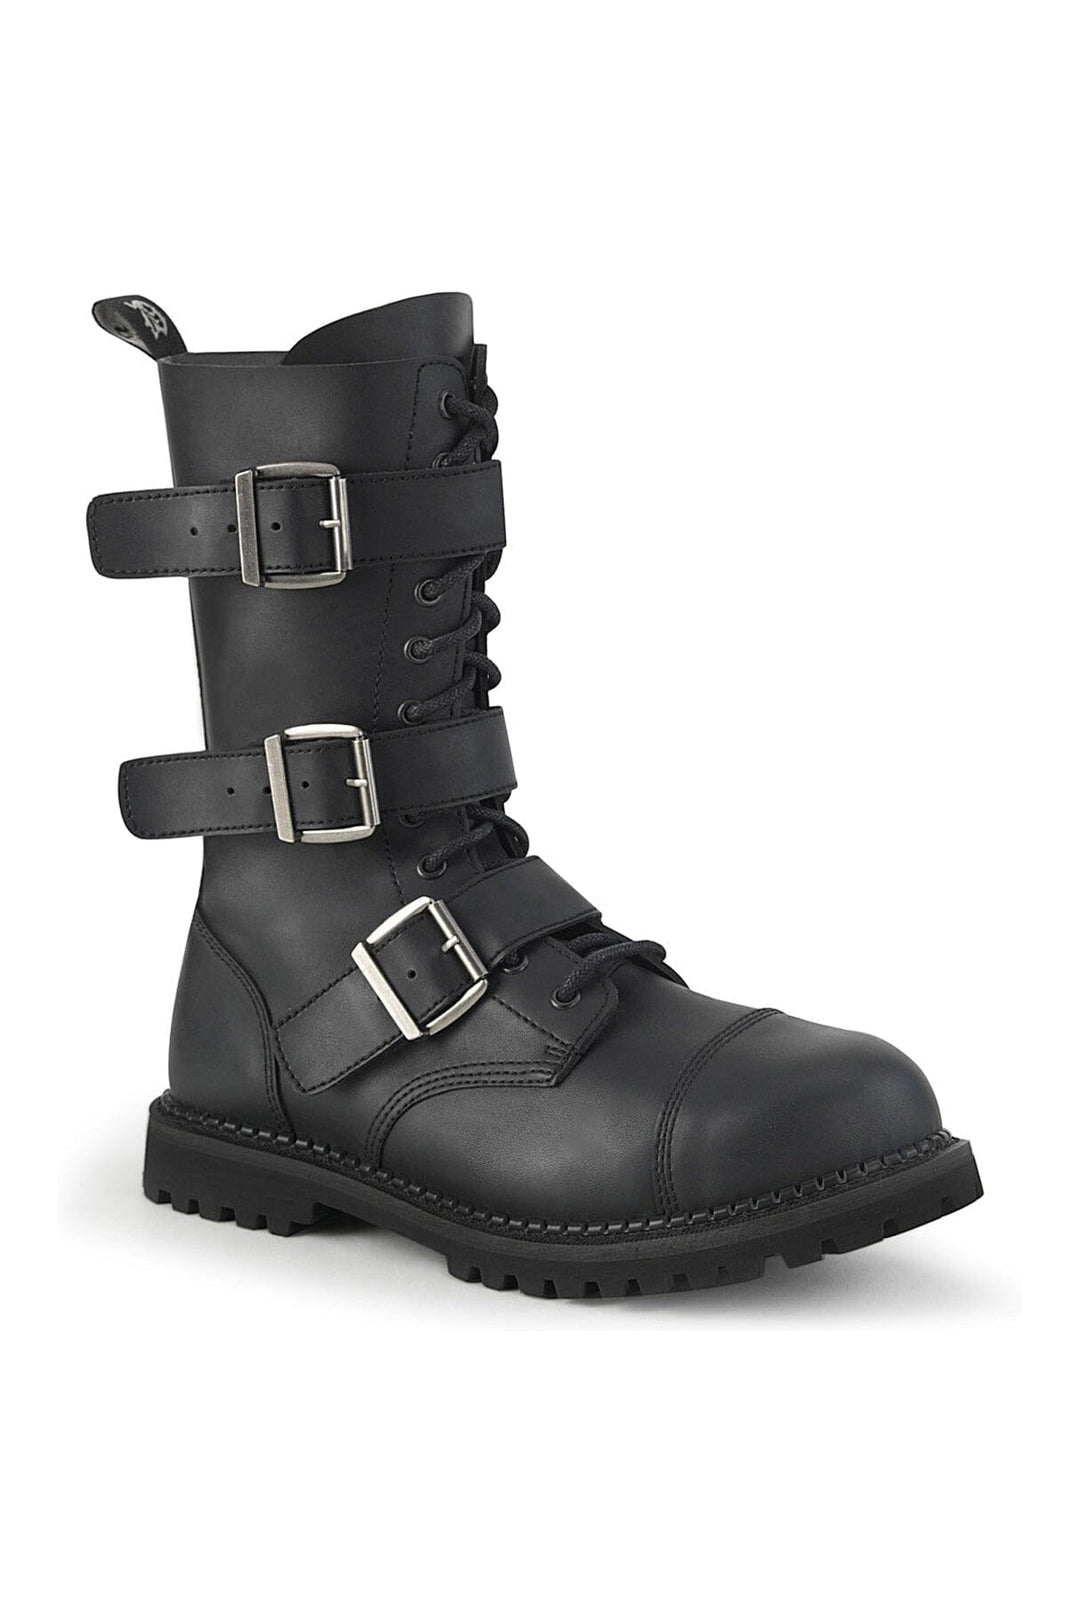 RIOT-12BK Black Vegan Leather Ankle Boot-Ankle Boots-Demonia-Black-10-Vegan Leather-SEXYSHOES.COM